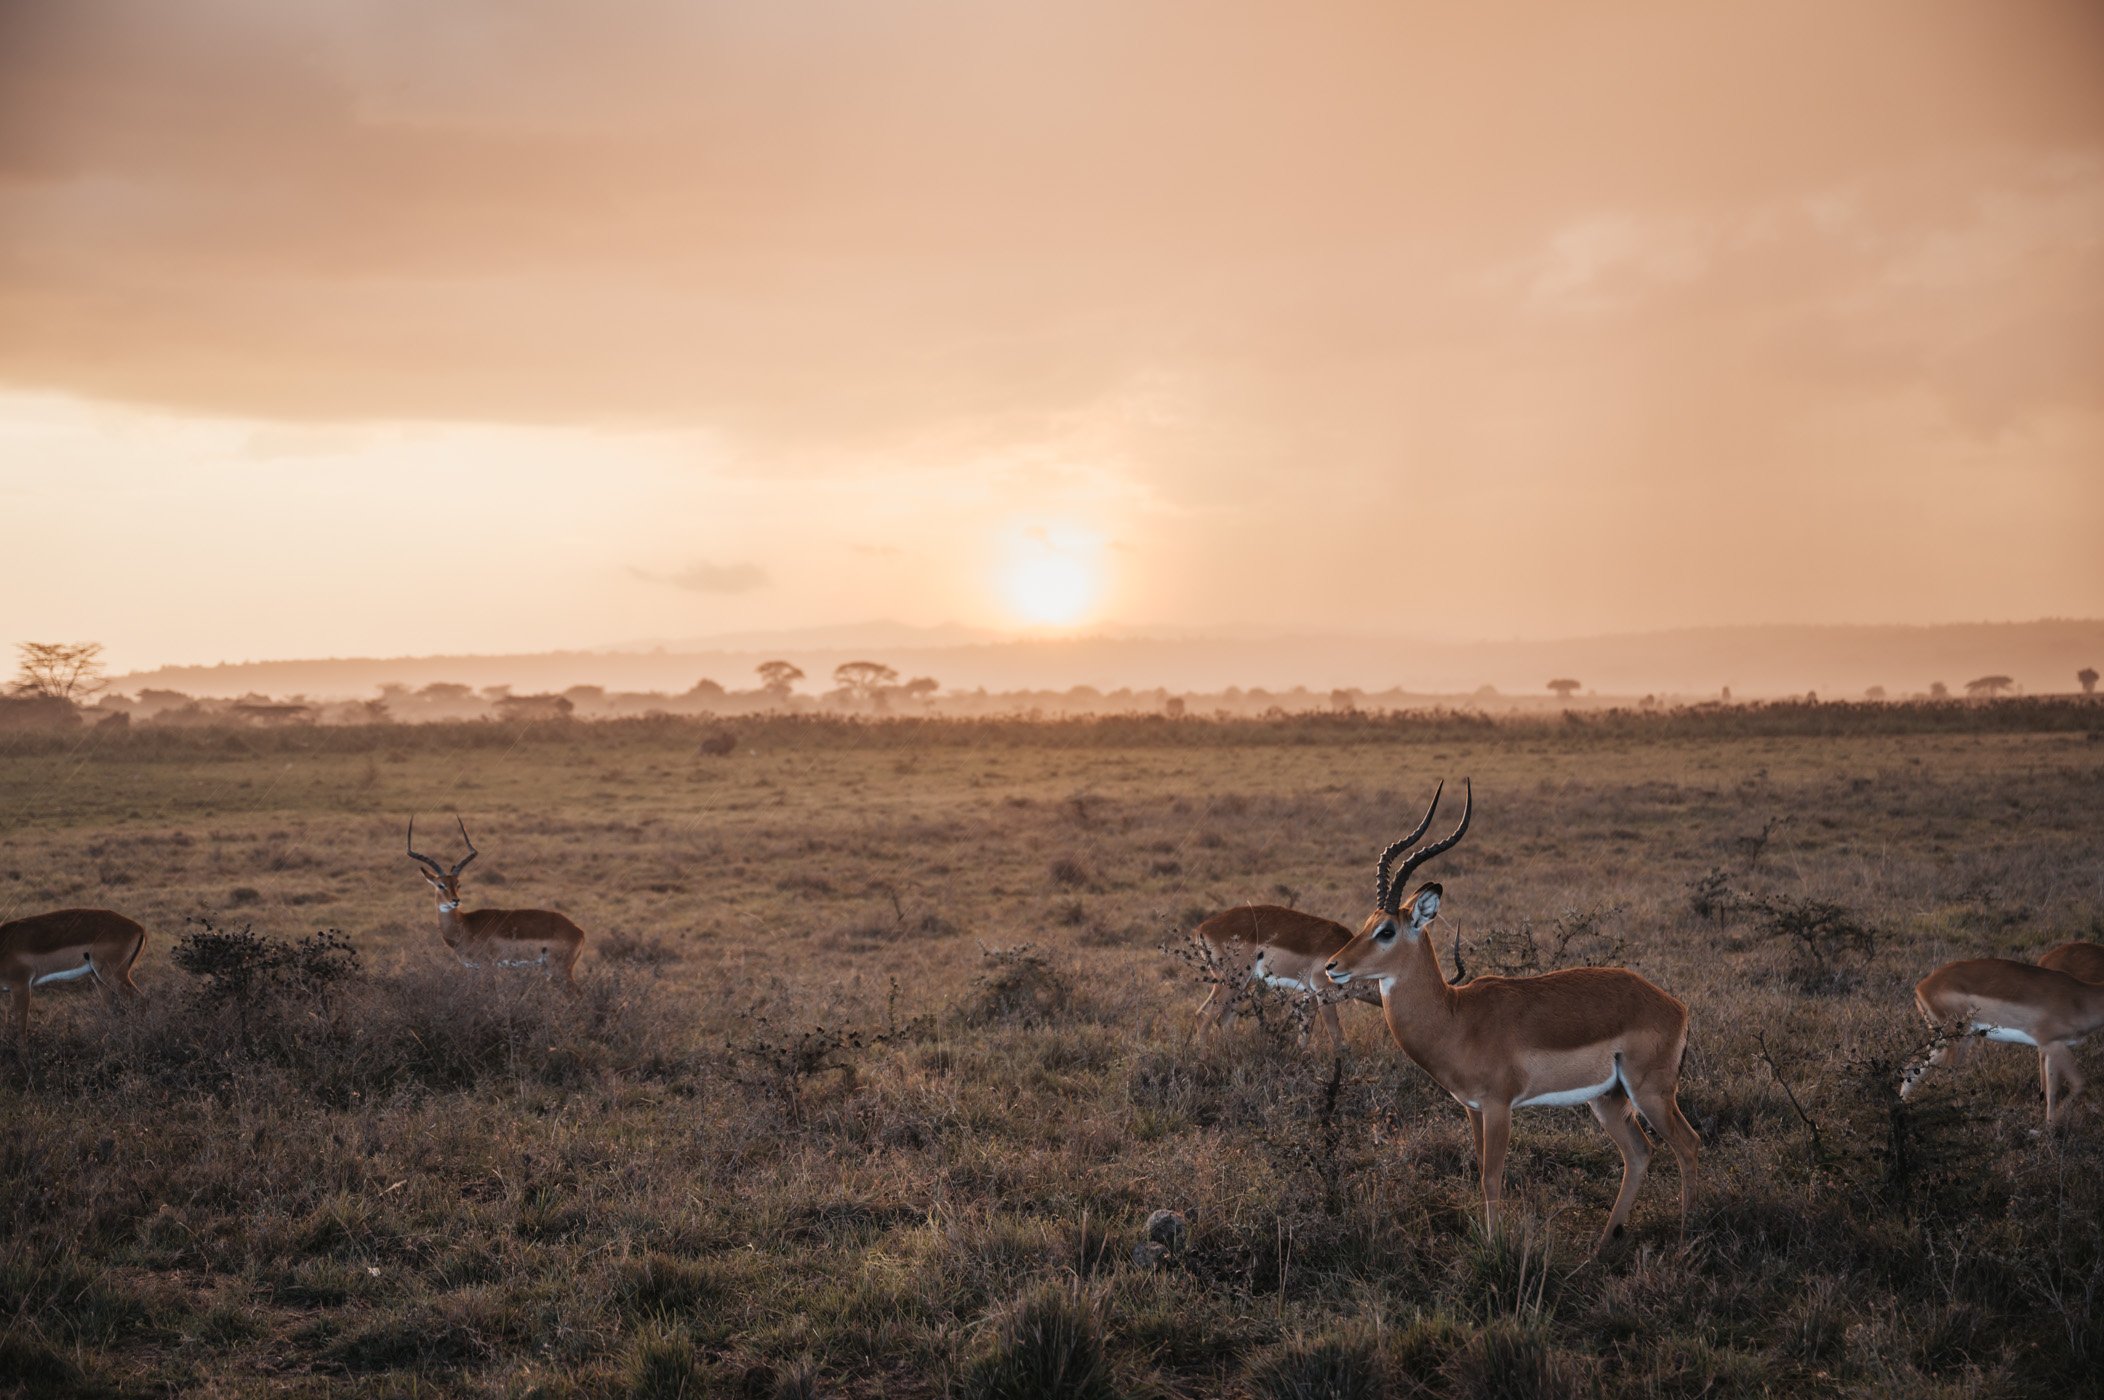 Impalas gather at sunset in Nairobi National Park in Kenya